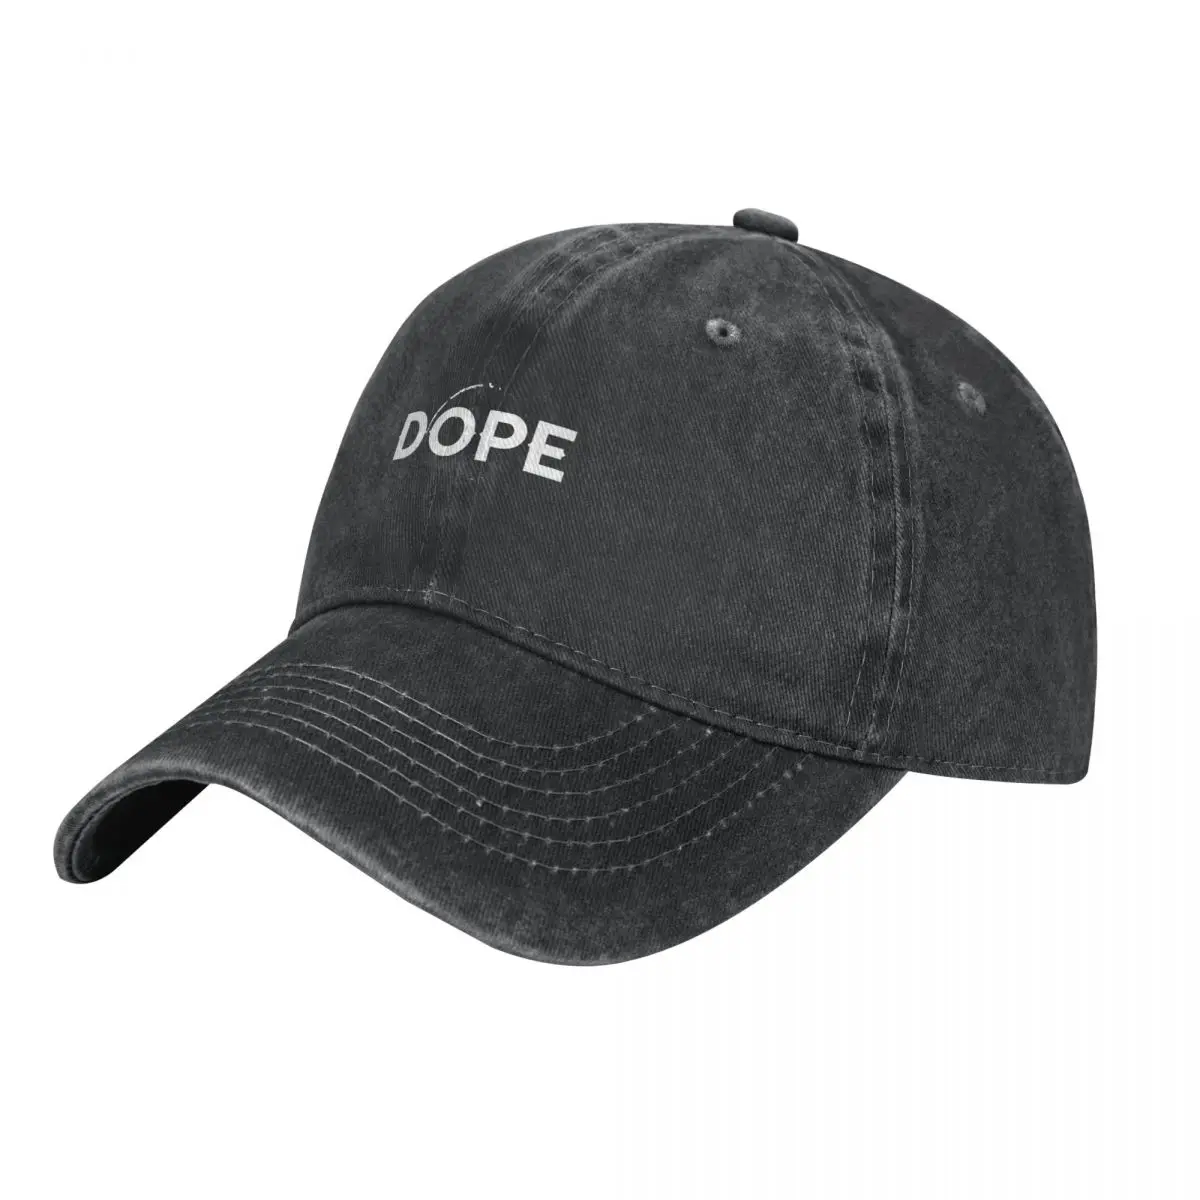 

Dope Cowboy Hat Hat Baseball Cap Mountaineering Snapback Cap New Hat Caps For Men Women's